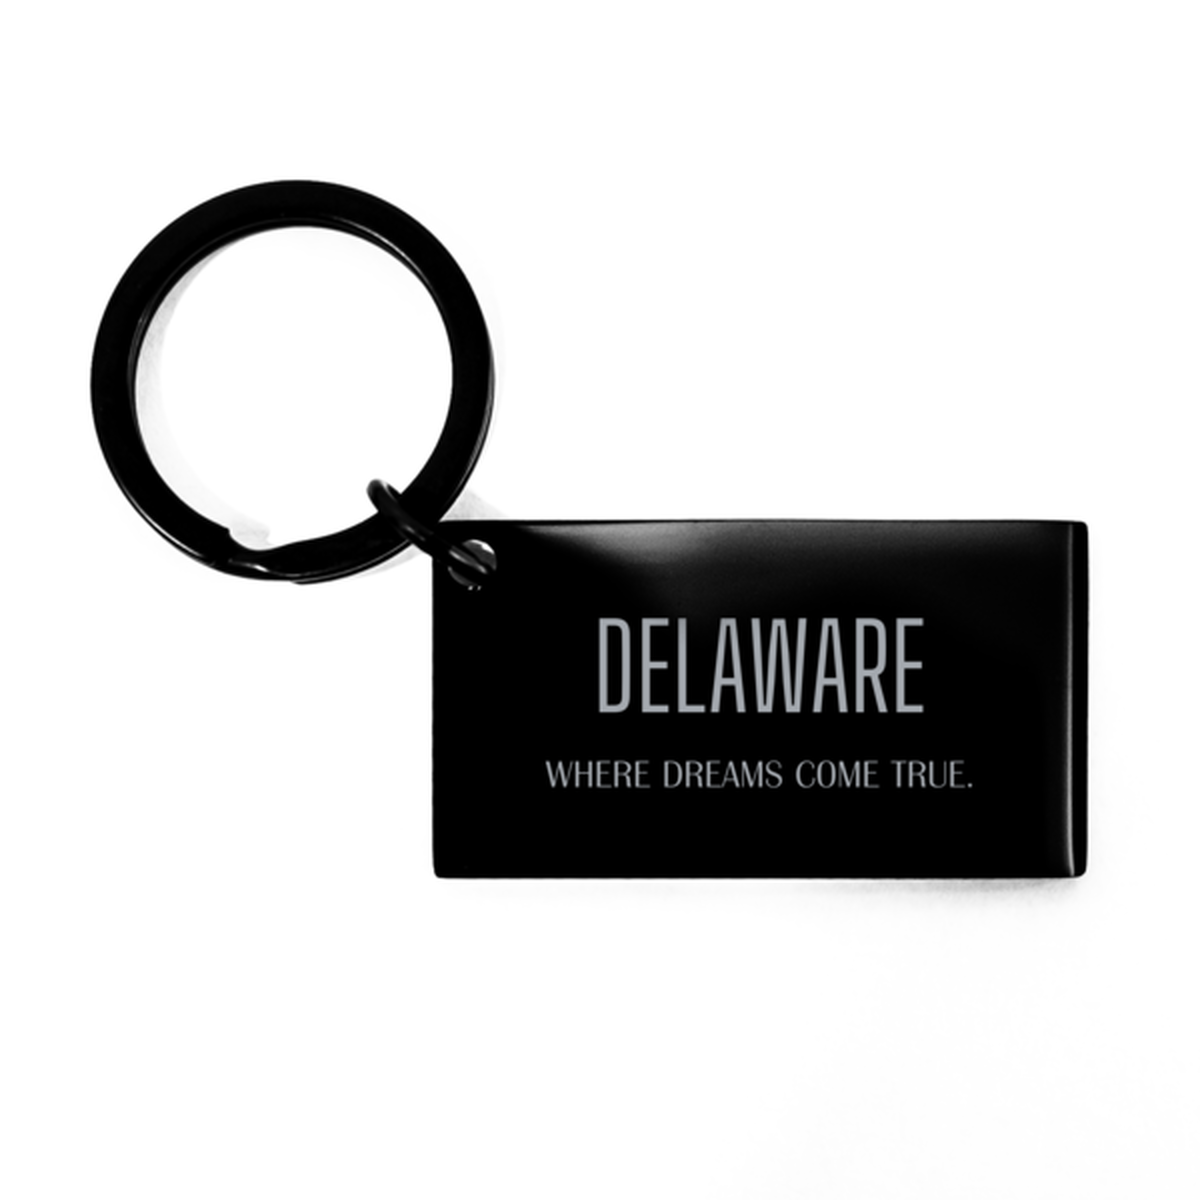 Love Delaware State Keychain, Delaware Where dreams come true, Birthday Inspirational Gifts For Delaware Men, Women, Friends